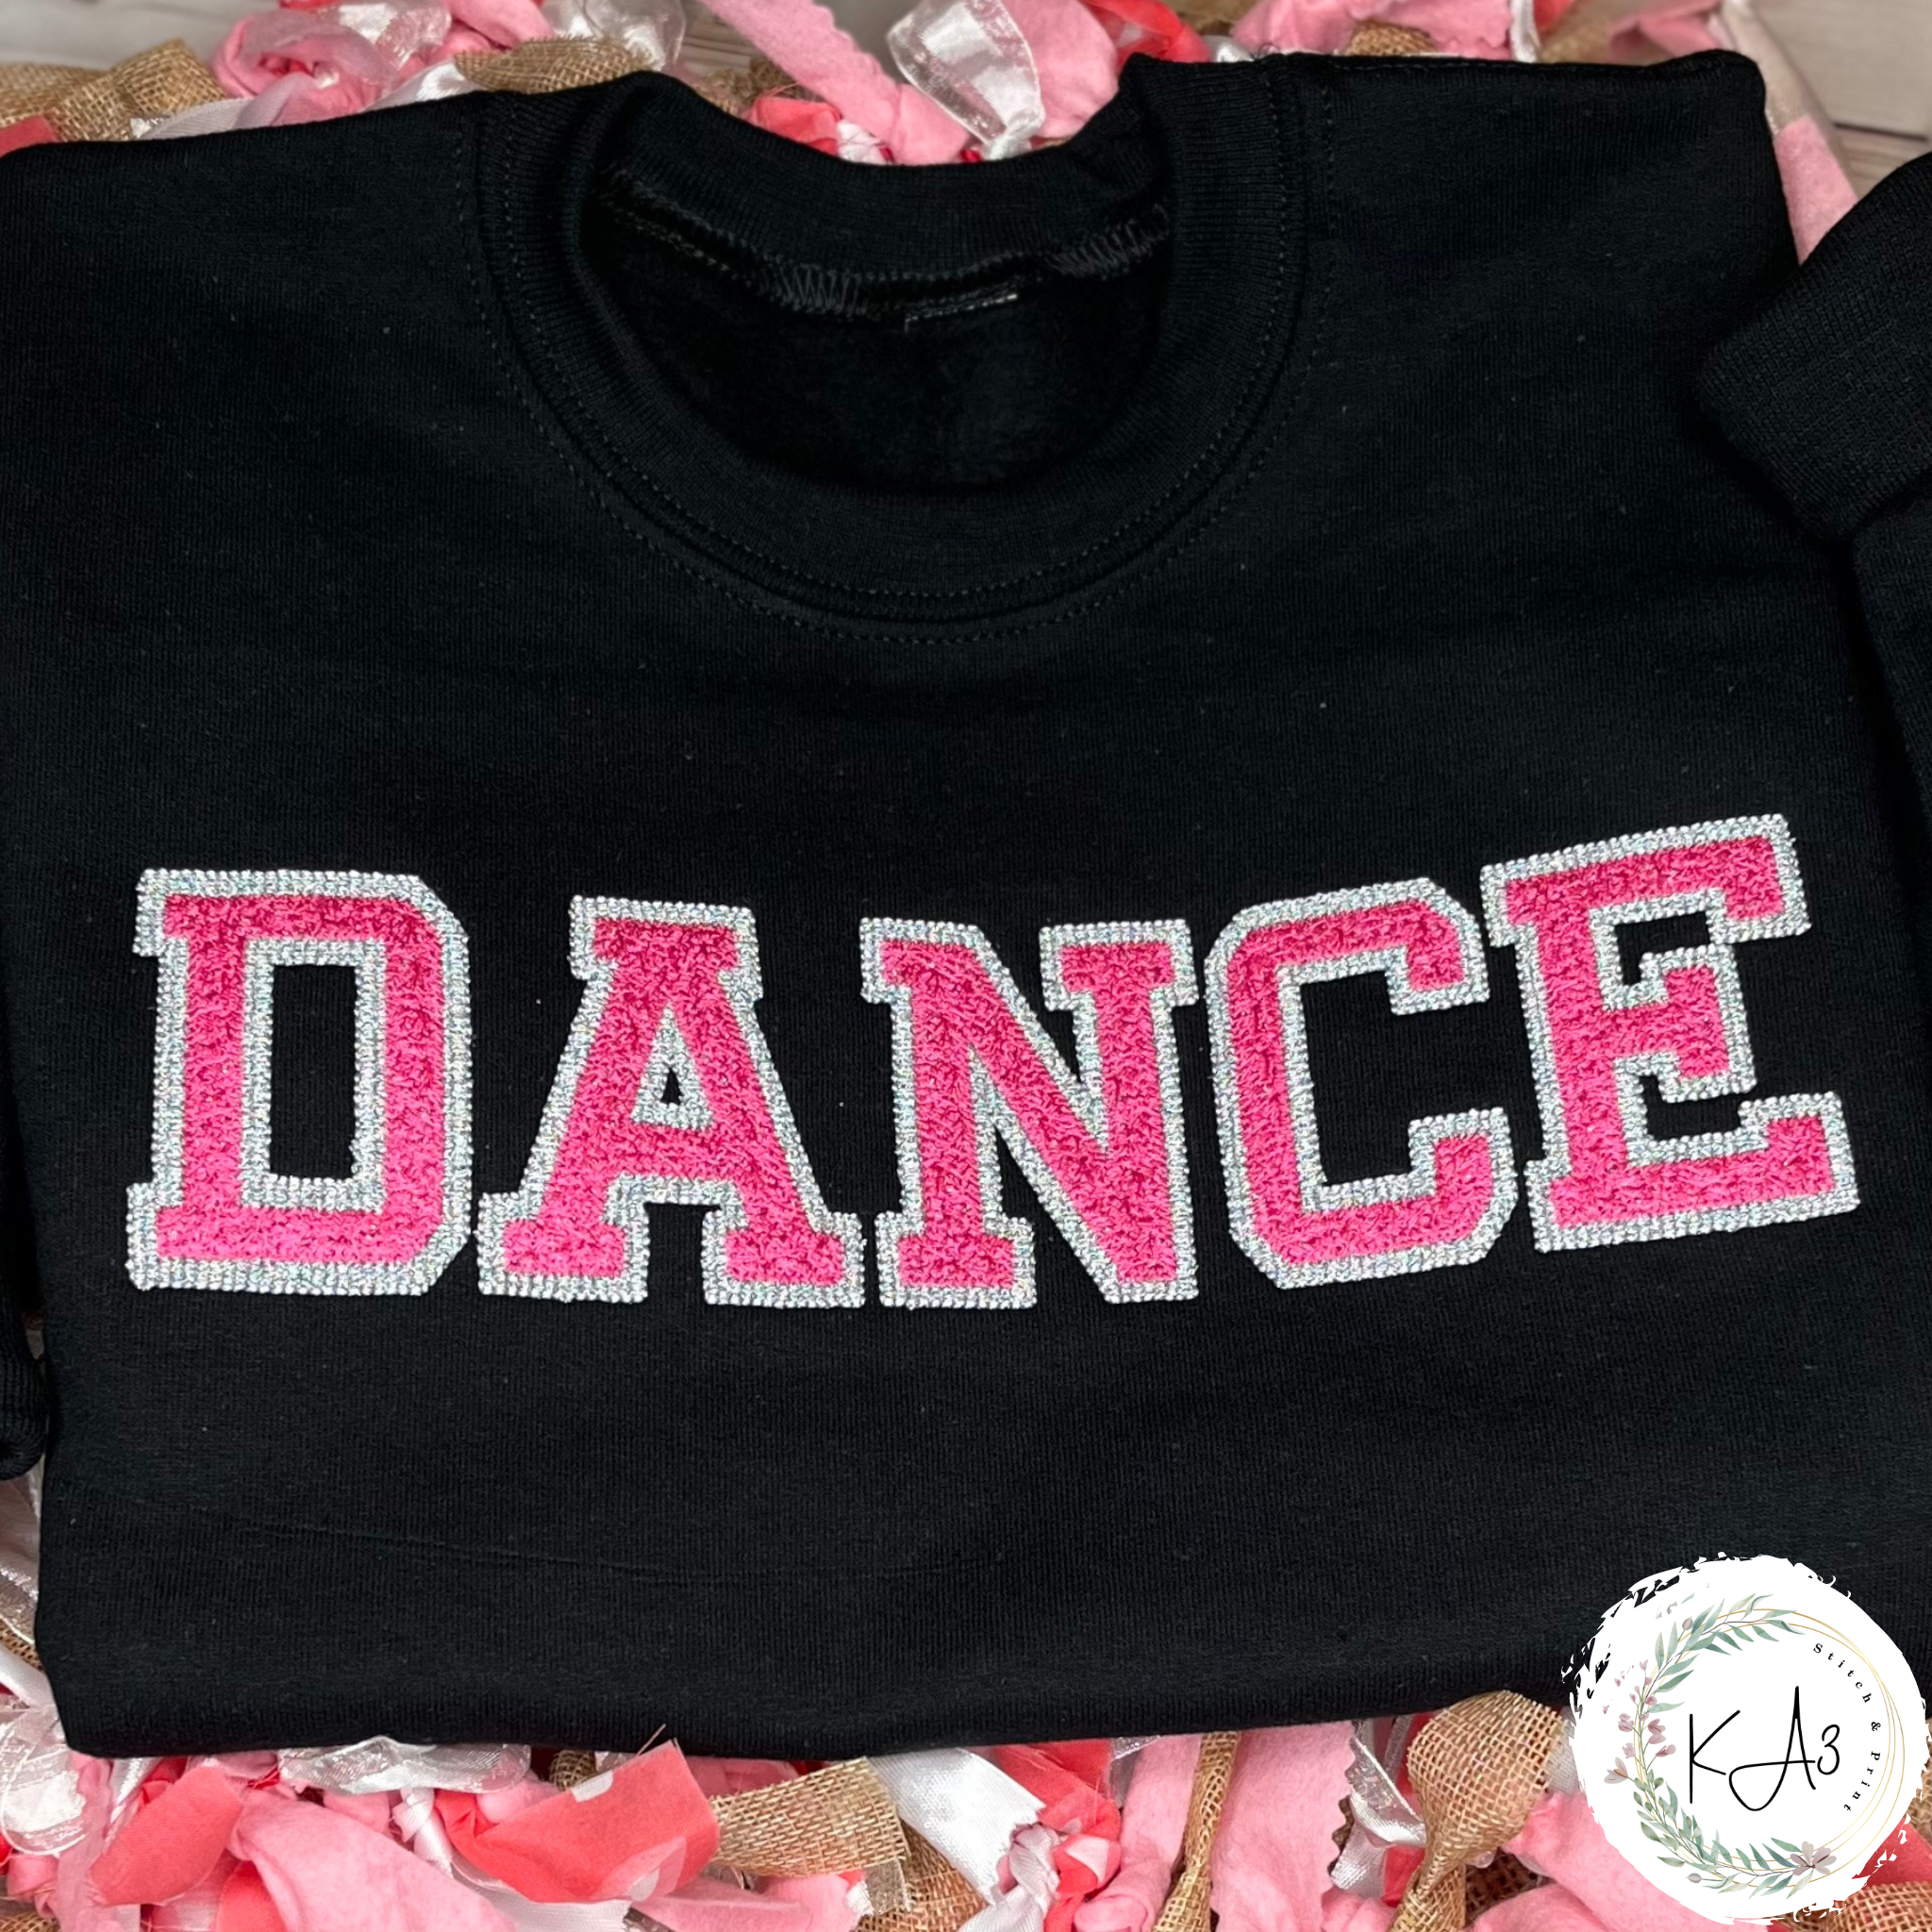 Shop Best Dance Mom Sweatshirt - KA3 Stitch & Print